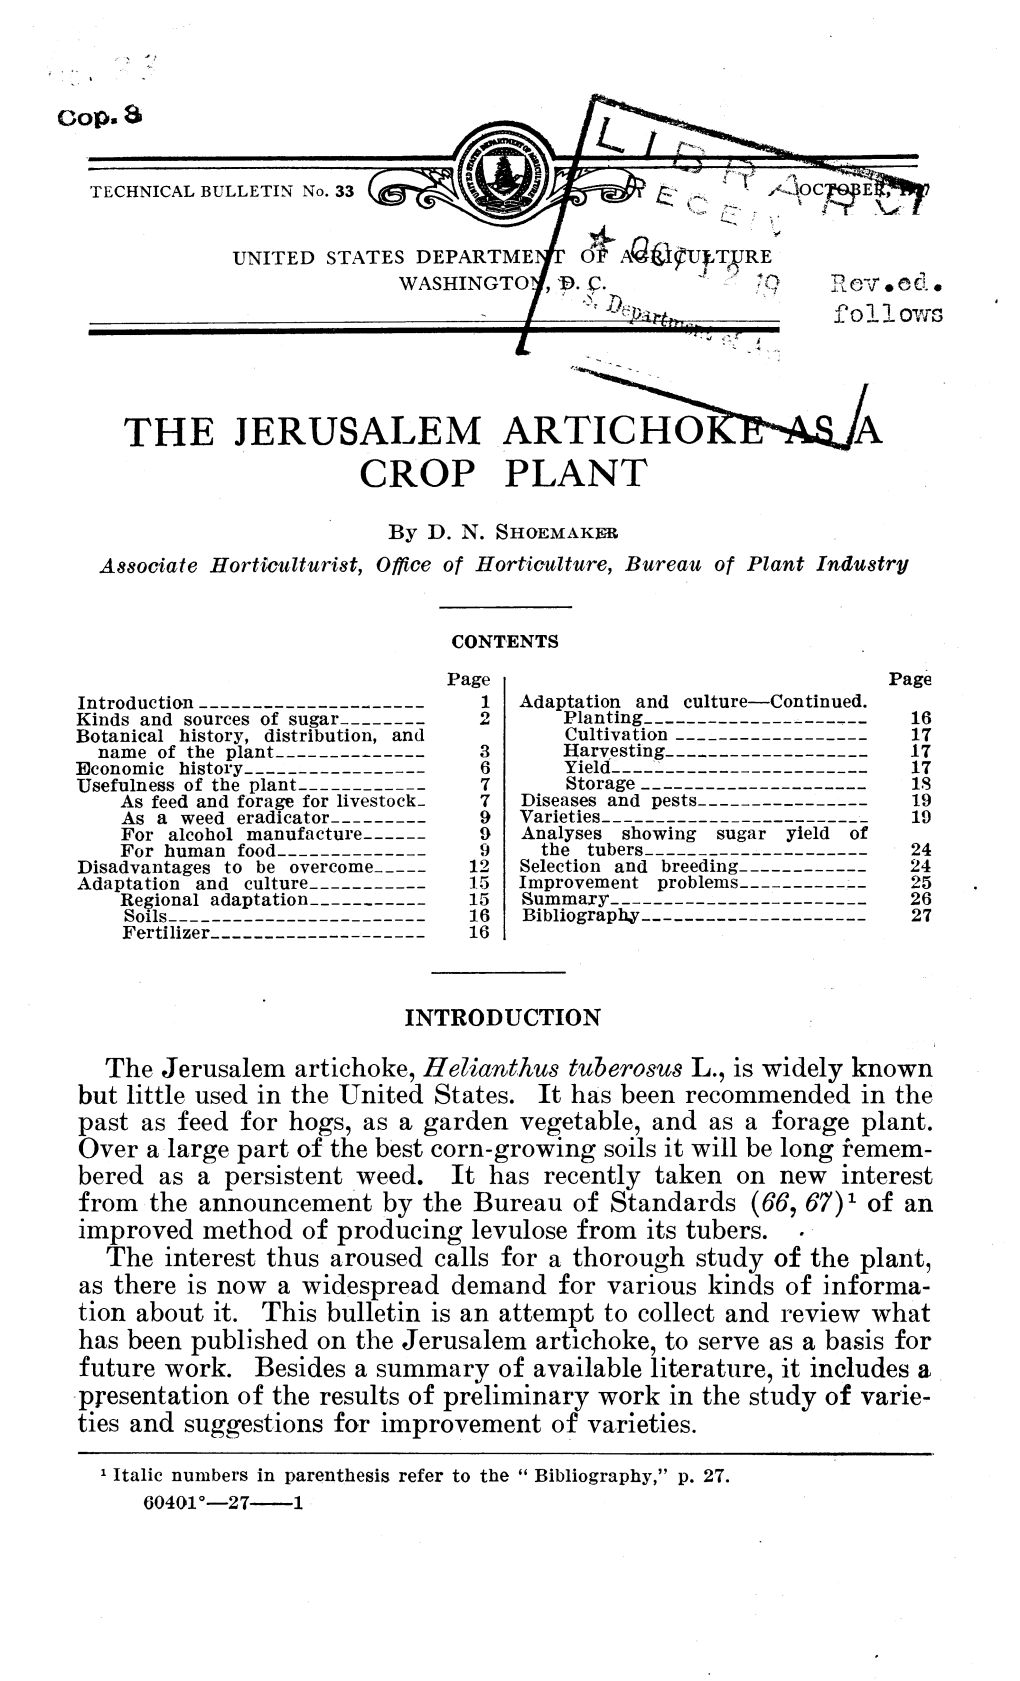 The Jerusalem Articho] Crop Plant